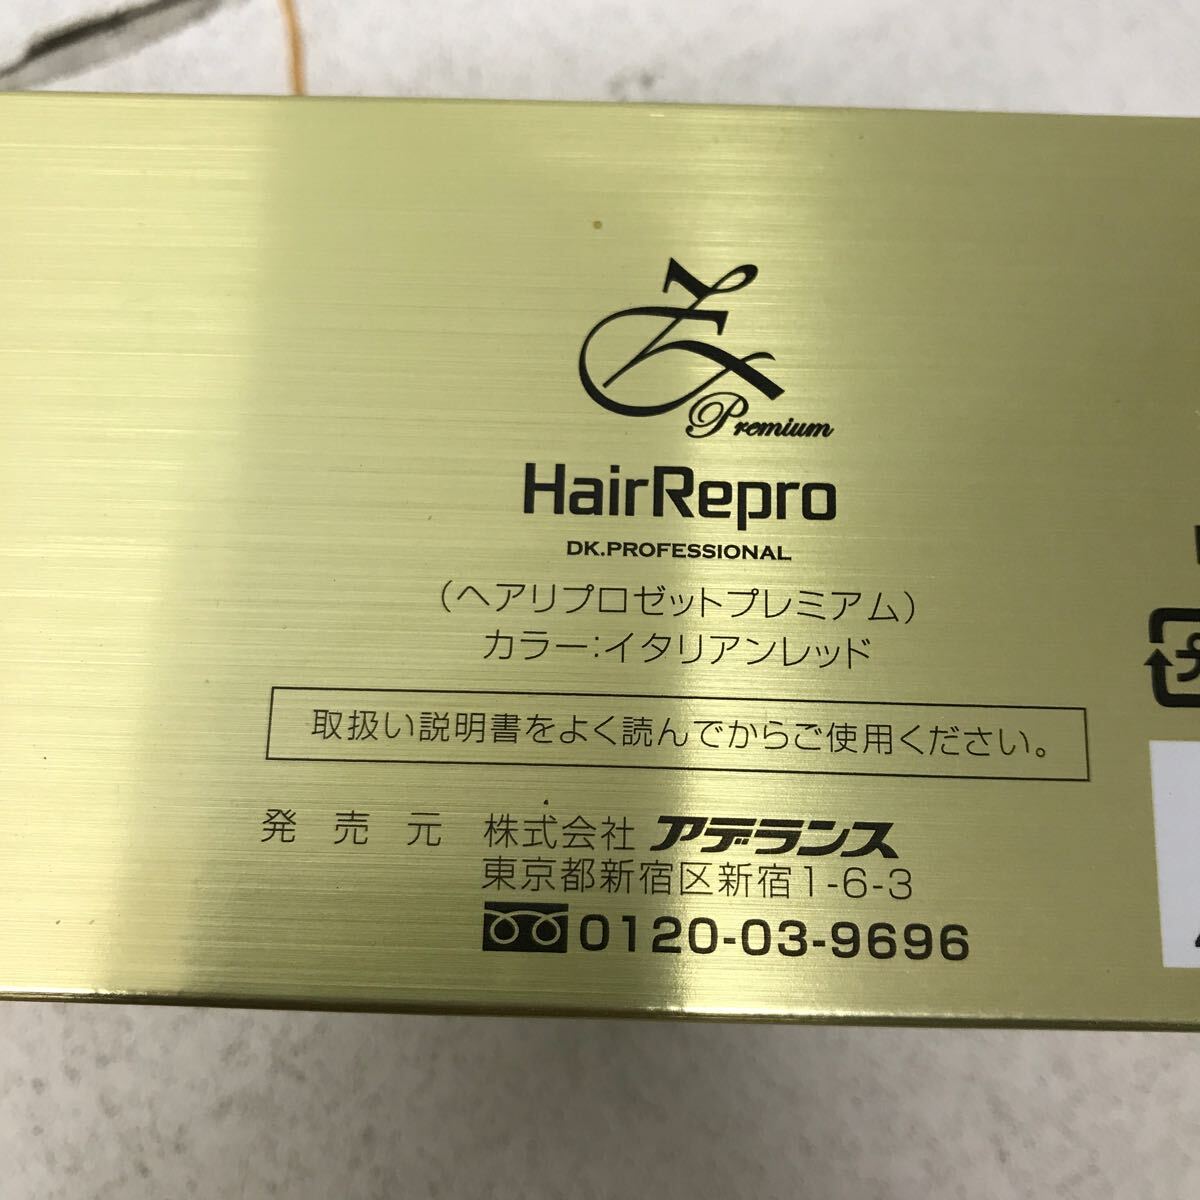 0405N アデランス Aderans ヘアリプロゼット プレミアム Hair Repro Premium DK.PROFESSIONAL イタリアンレッド ヘアケア 美容機器の画像9